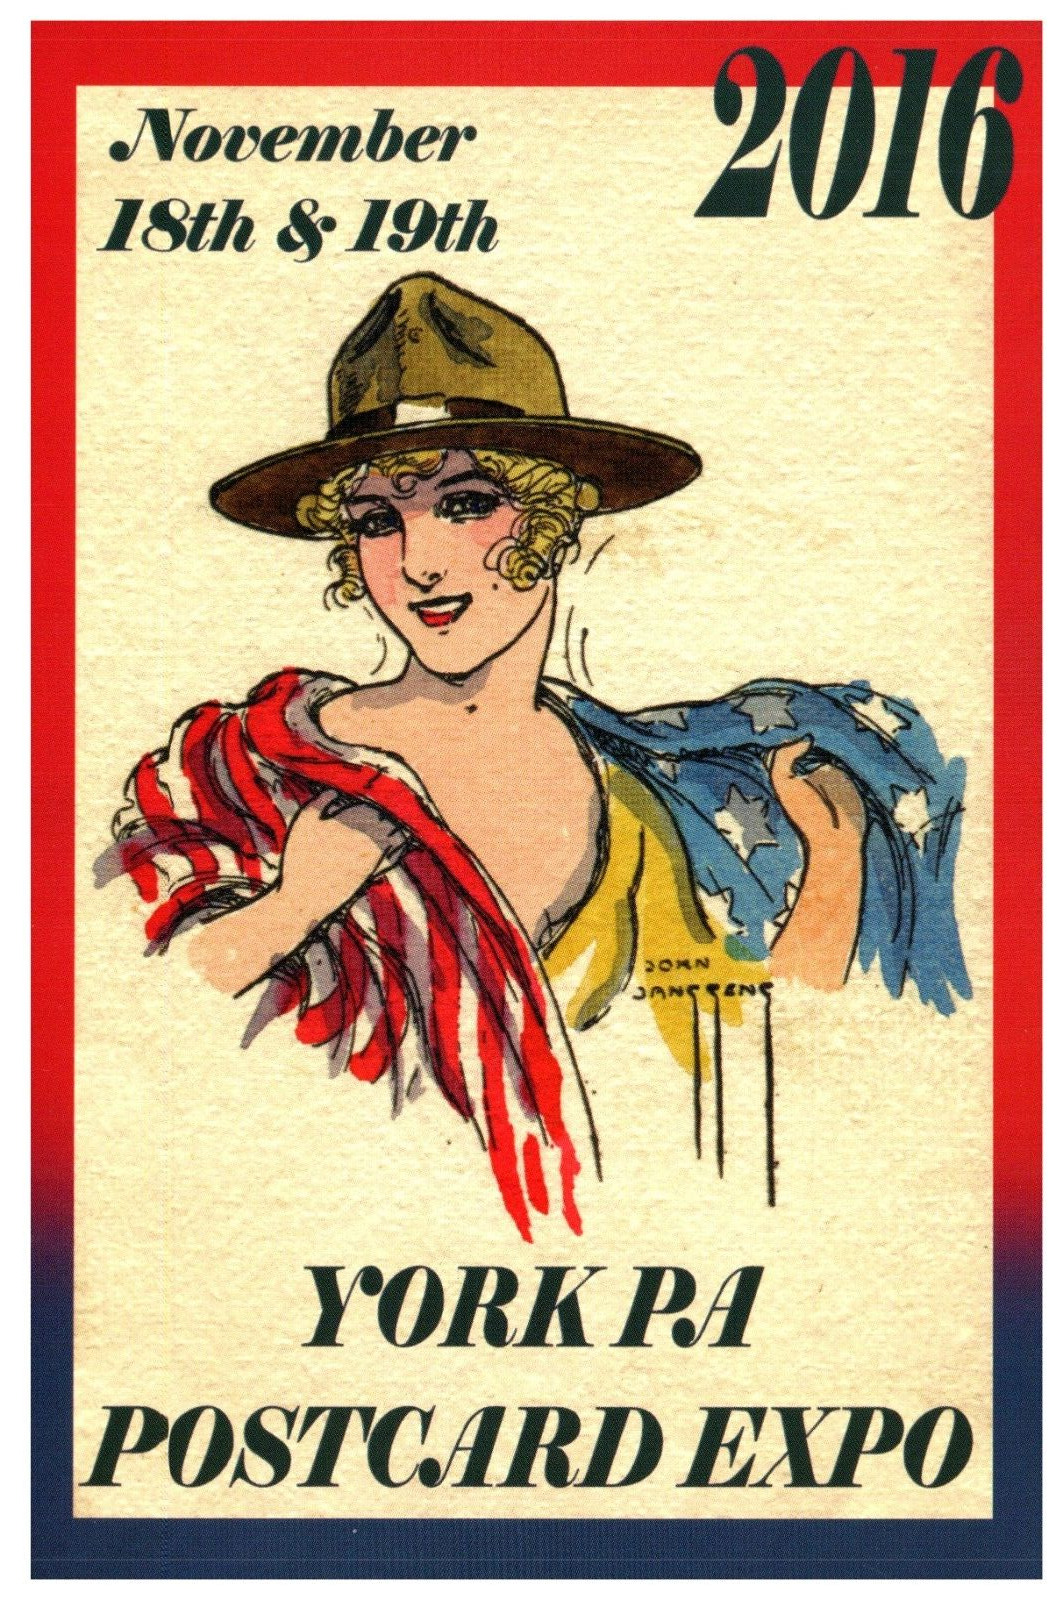 Female America Postcard York Pennsylvania Postcard Expo 2016 advertising